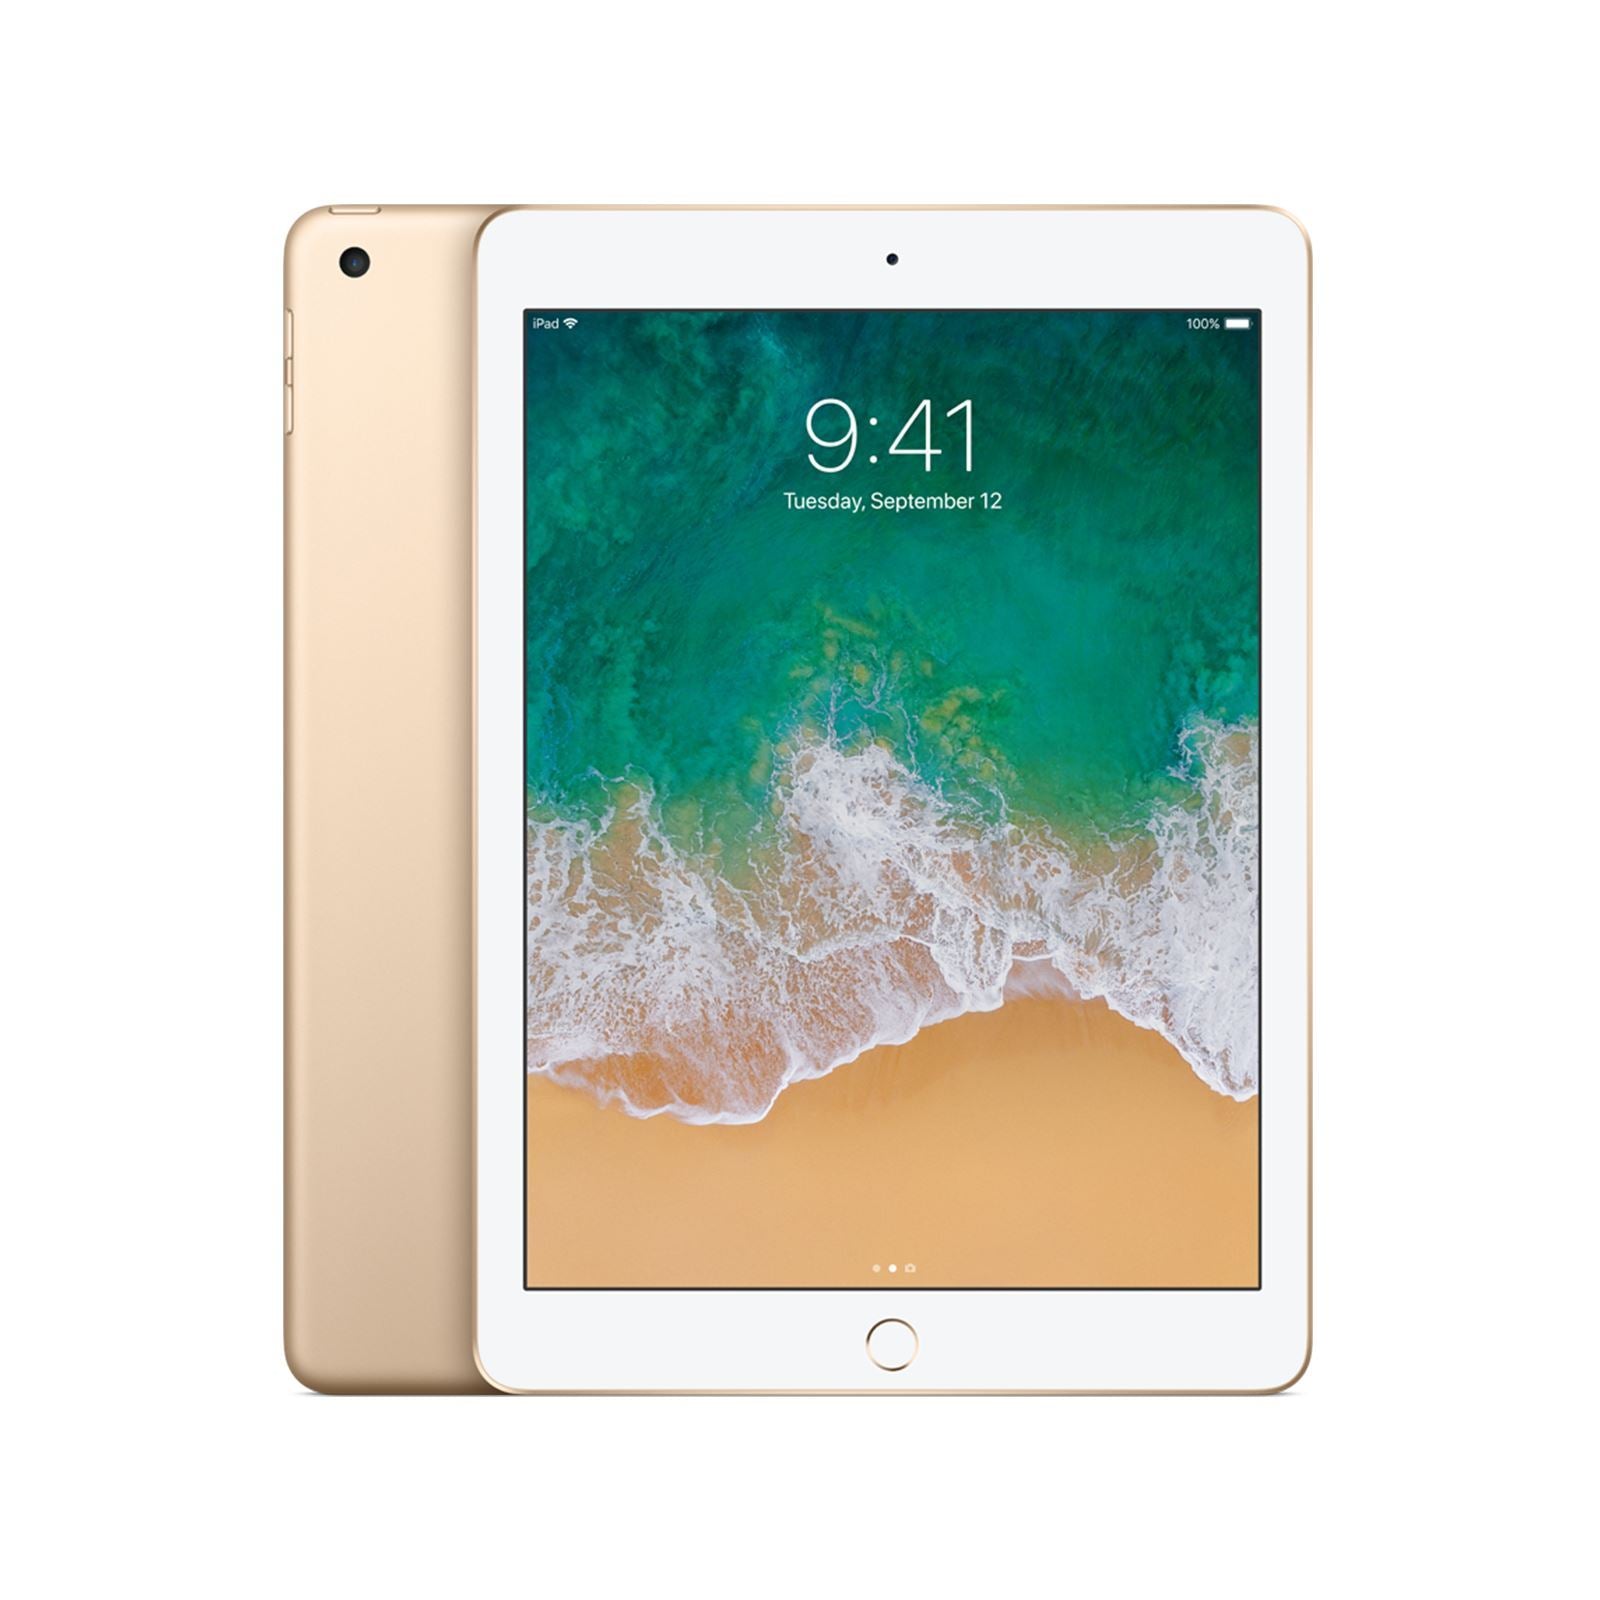 Apple iPad 5th Gen 128GB WiFi Gold - Refurbished Excellent